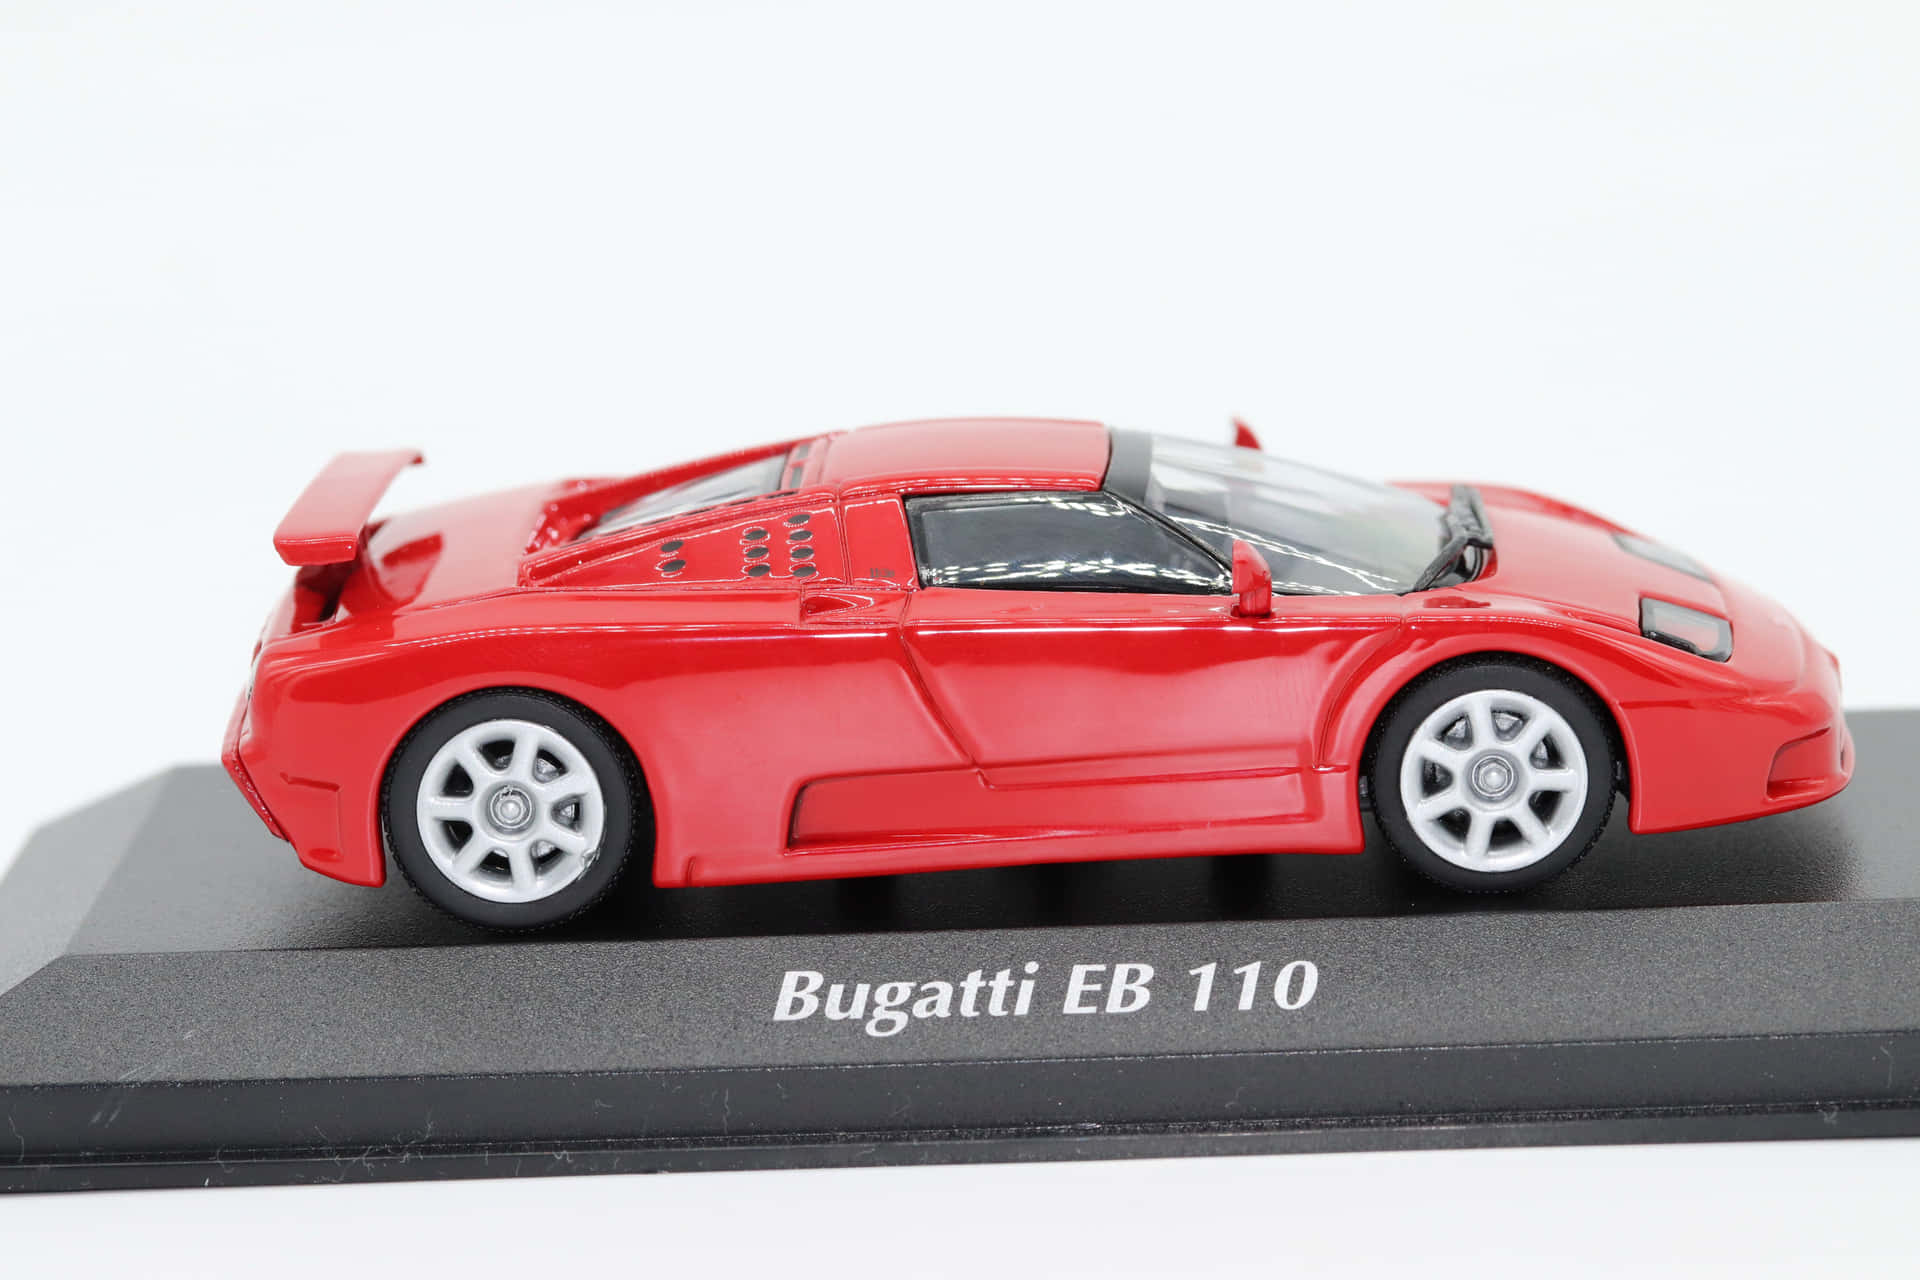 Exquisite Bugatti EB110 in its full glory Wallpaper